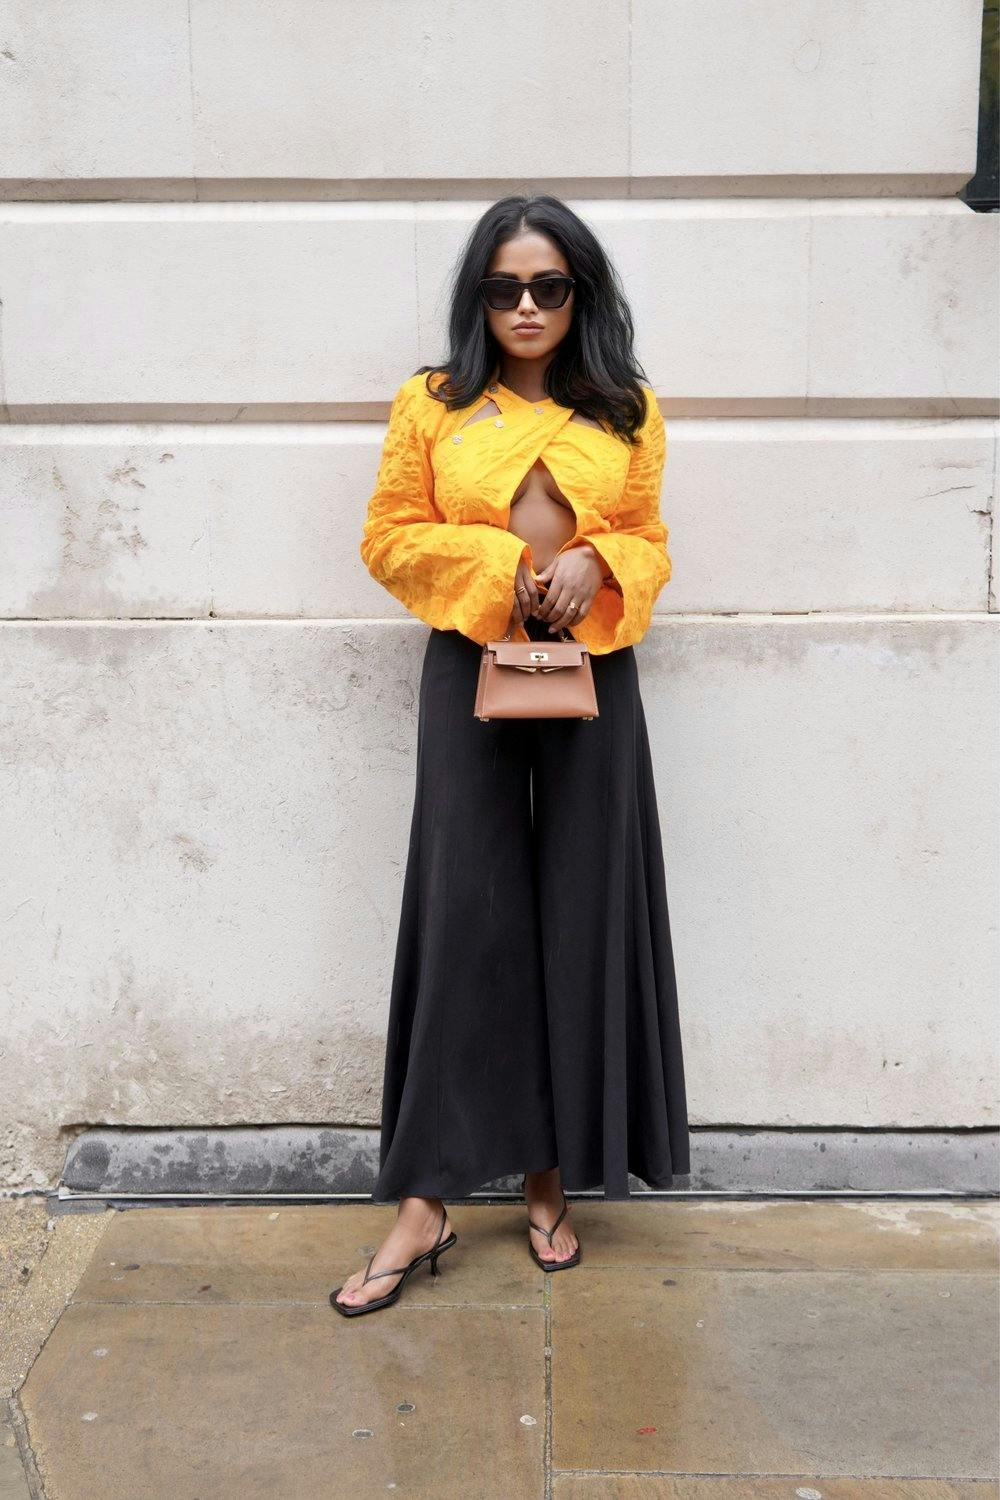 Sachini wearing Nanushka Top at London Fashion Week